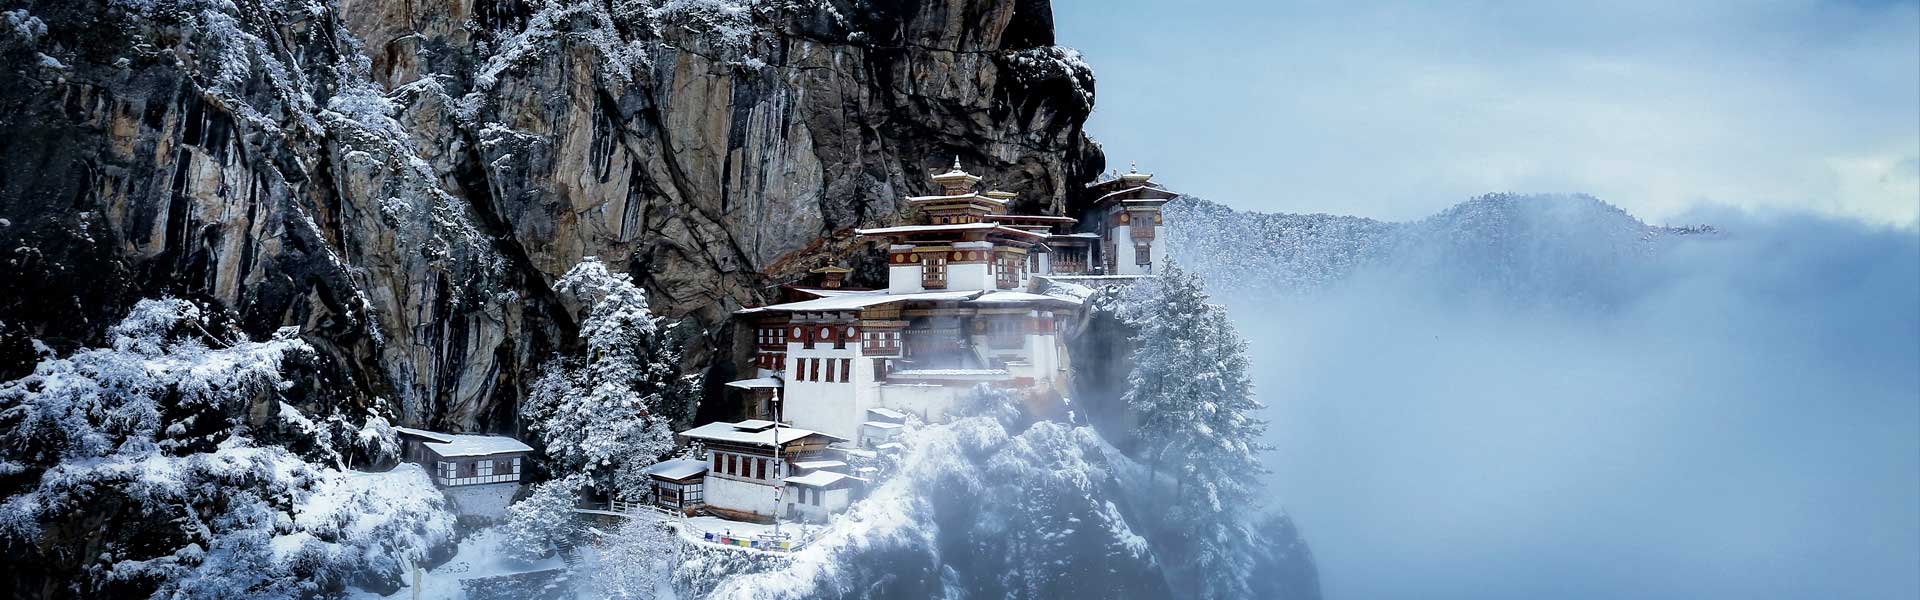 Bhutan Tour From UK